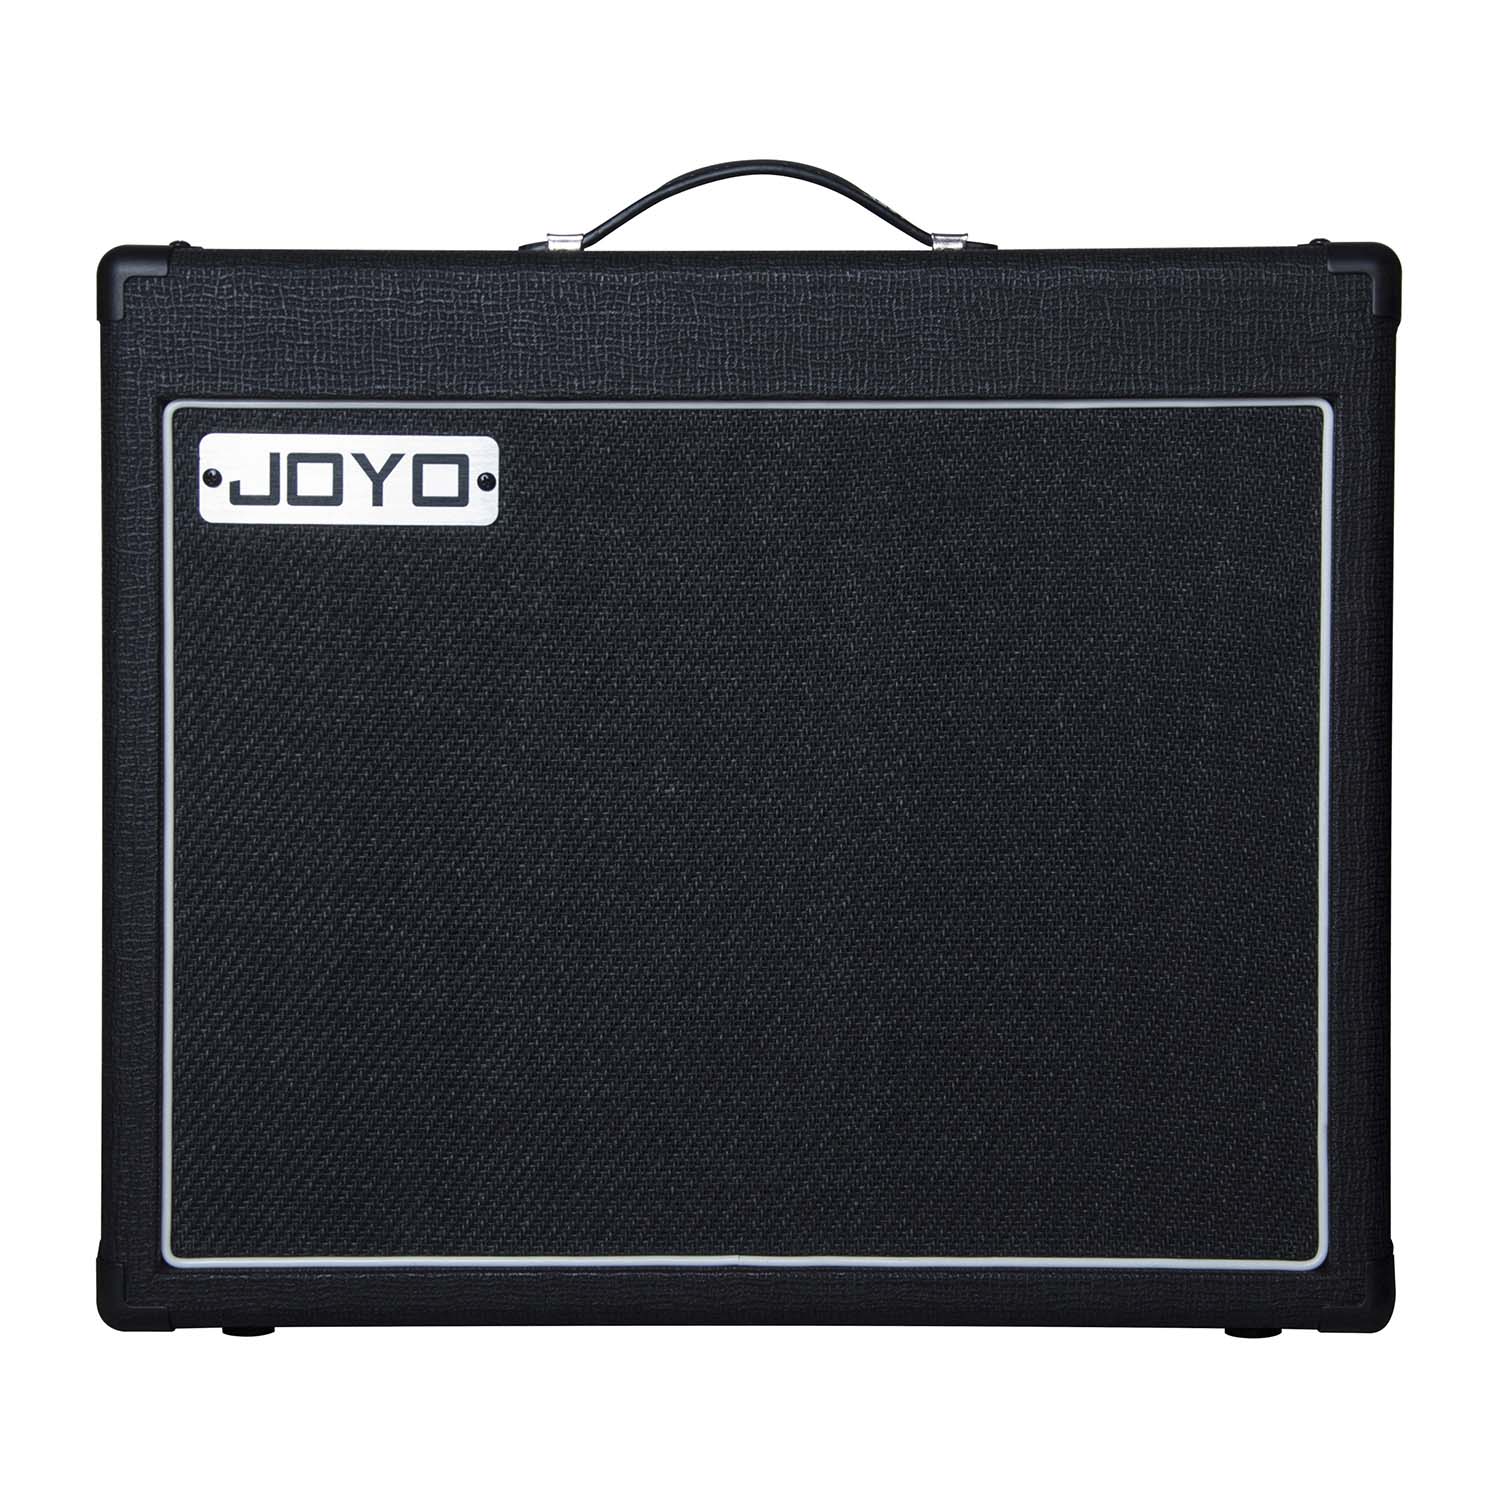 Joyo 112V Speaker Cabinet - 1 x 12 inch 